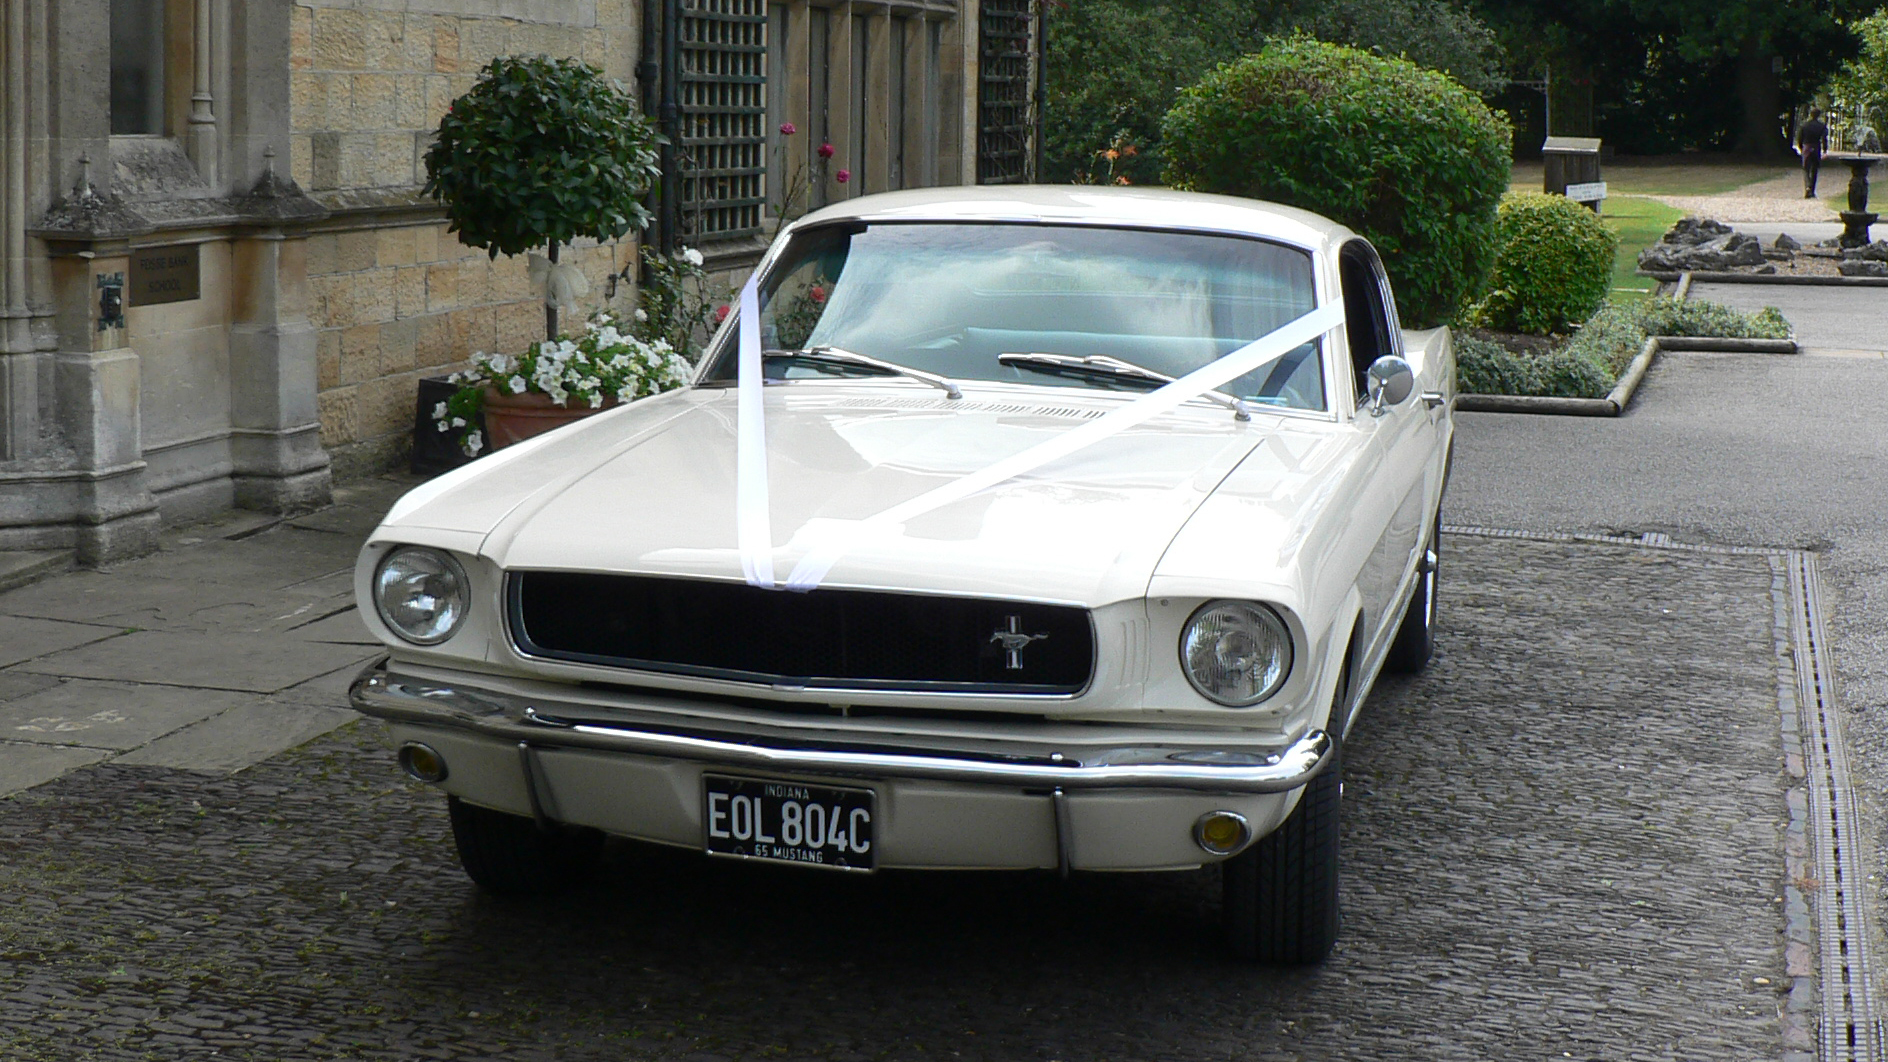 Ford Mustang Fastback V8